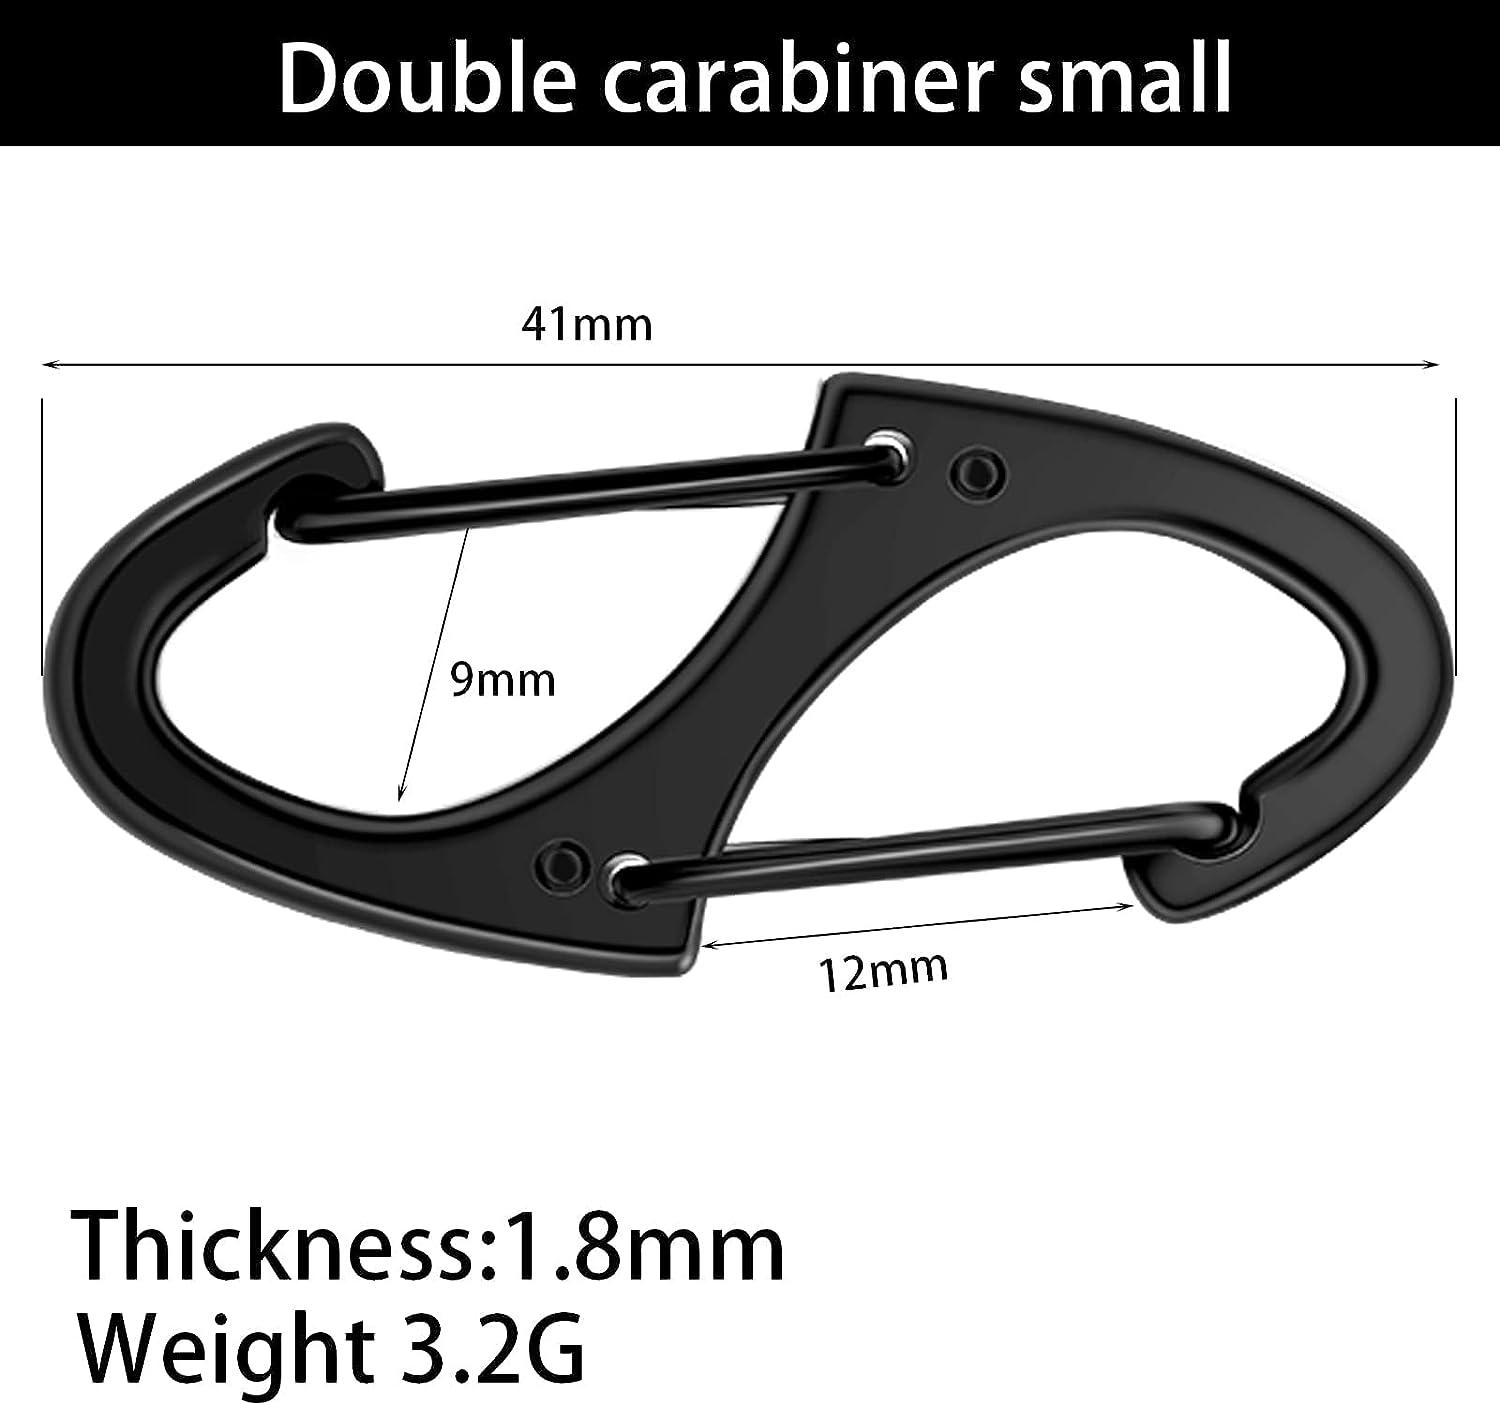  20 Pieces S Carabiner Small Alloy Snap Hook Zipper